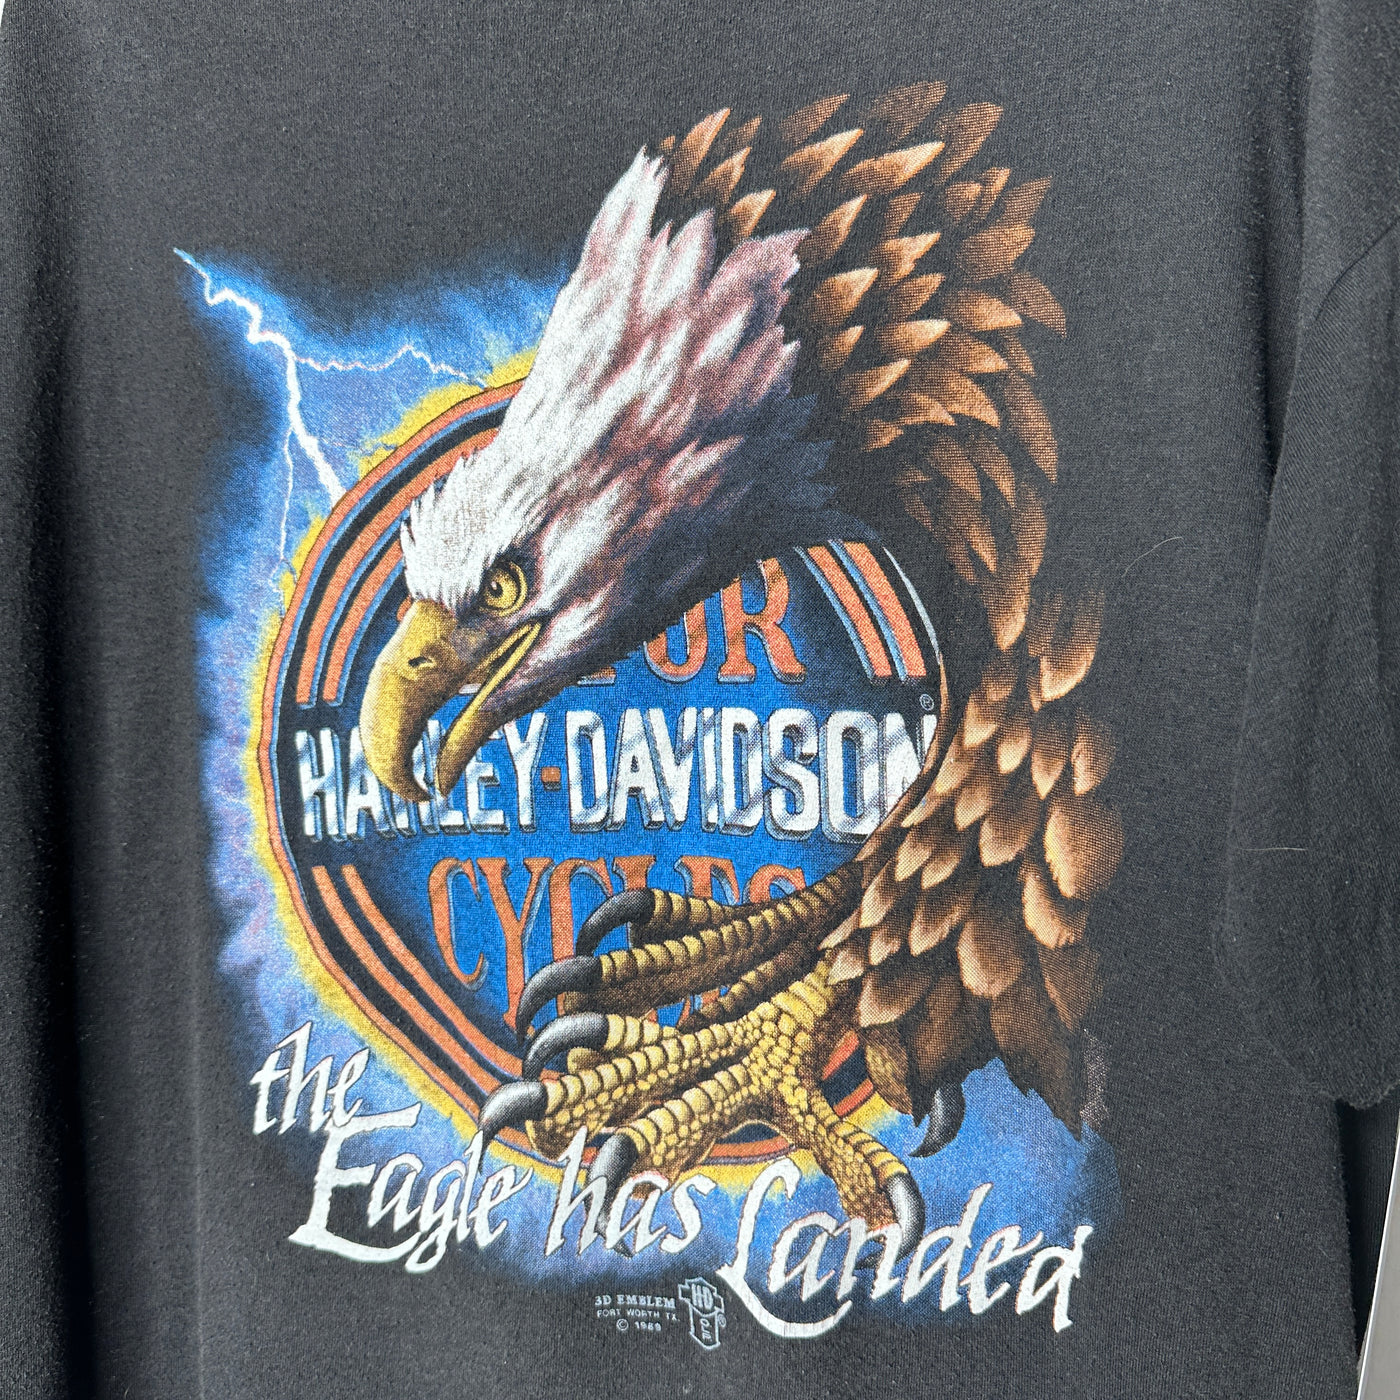 '89 Harley Davidson 3D Emblem "The Eagle has Landed" T-shirt sz 2XL